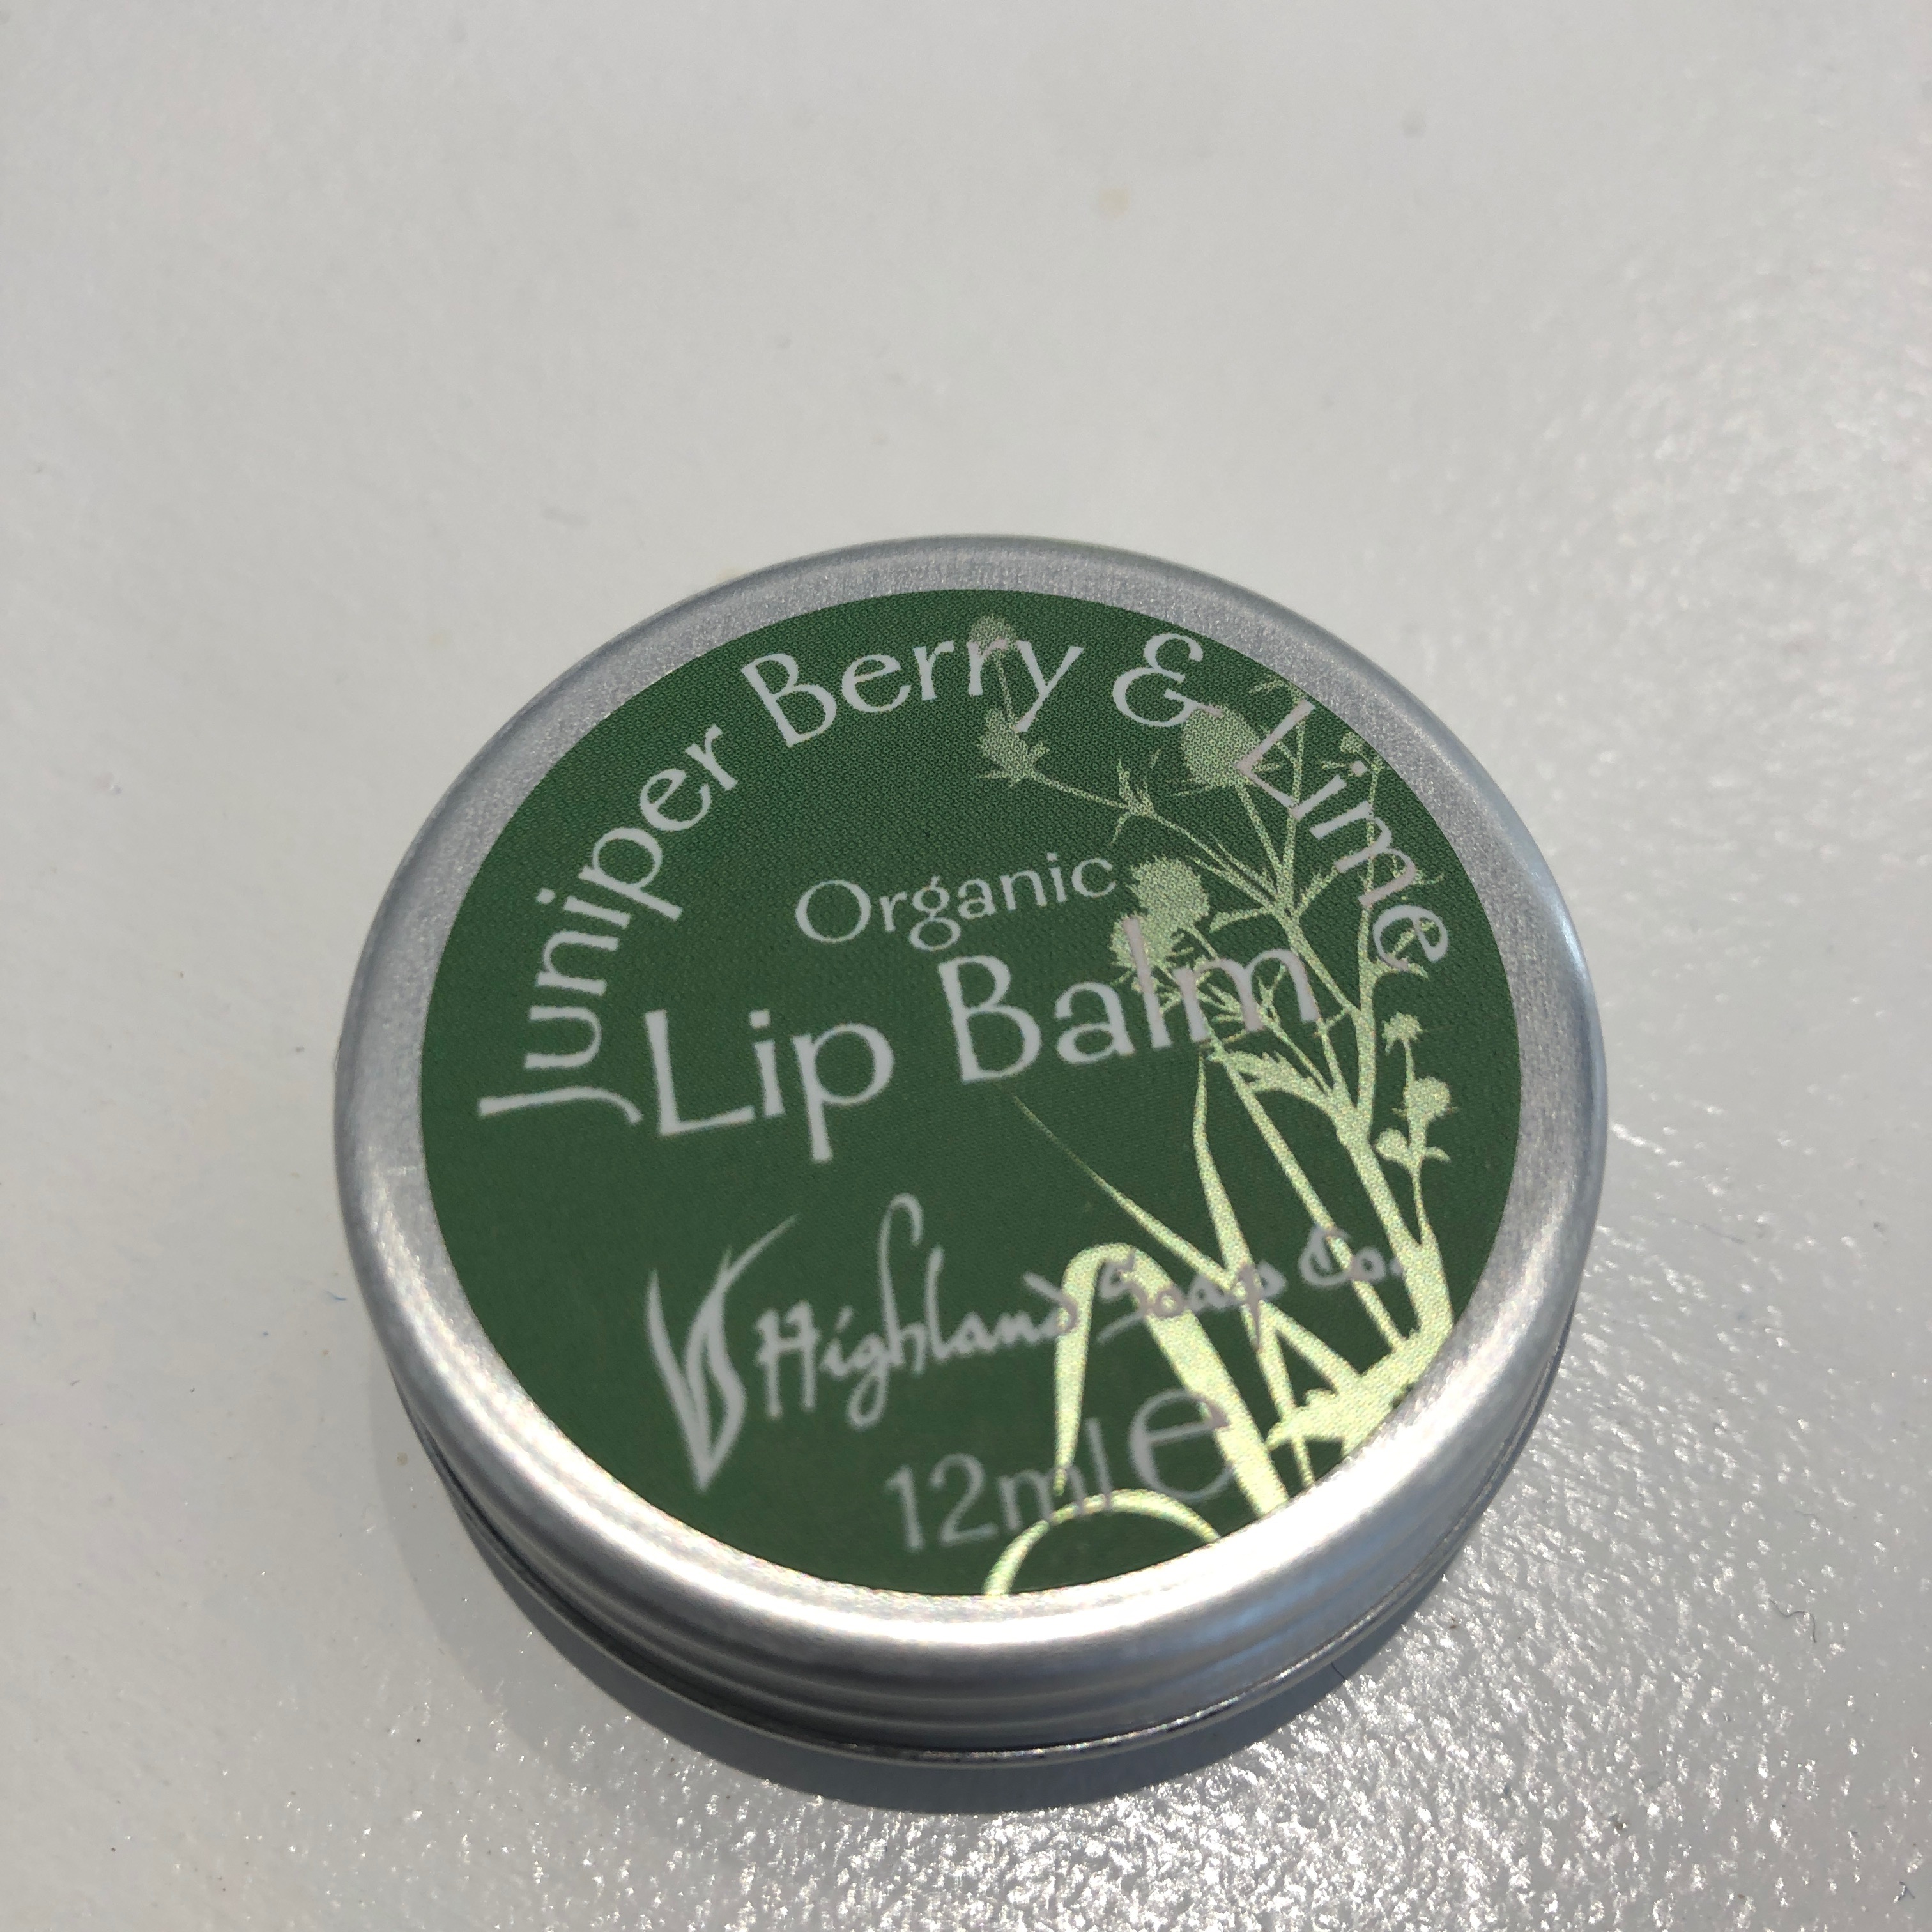 Lip Balm by Highland Soap Co